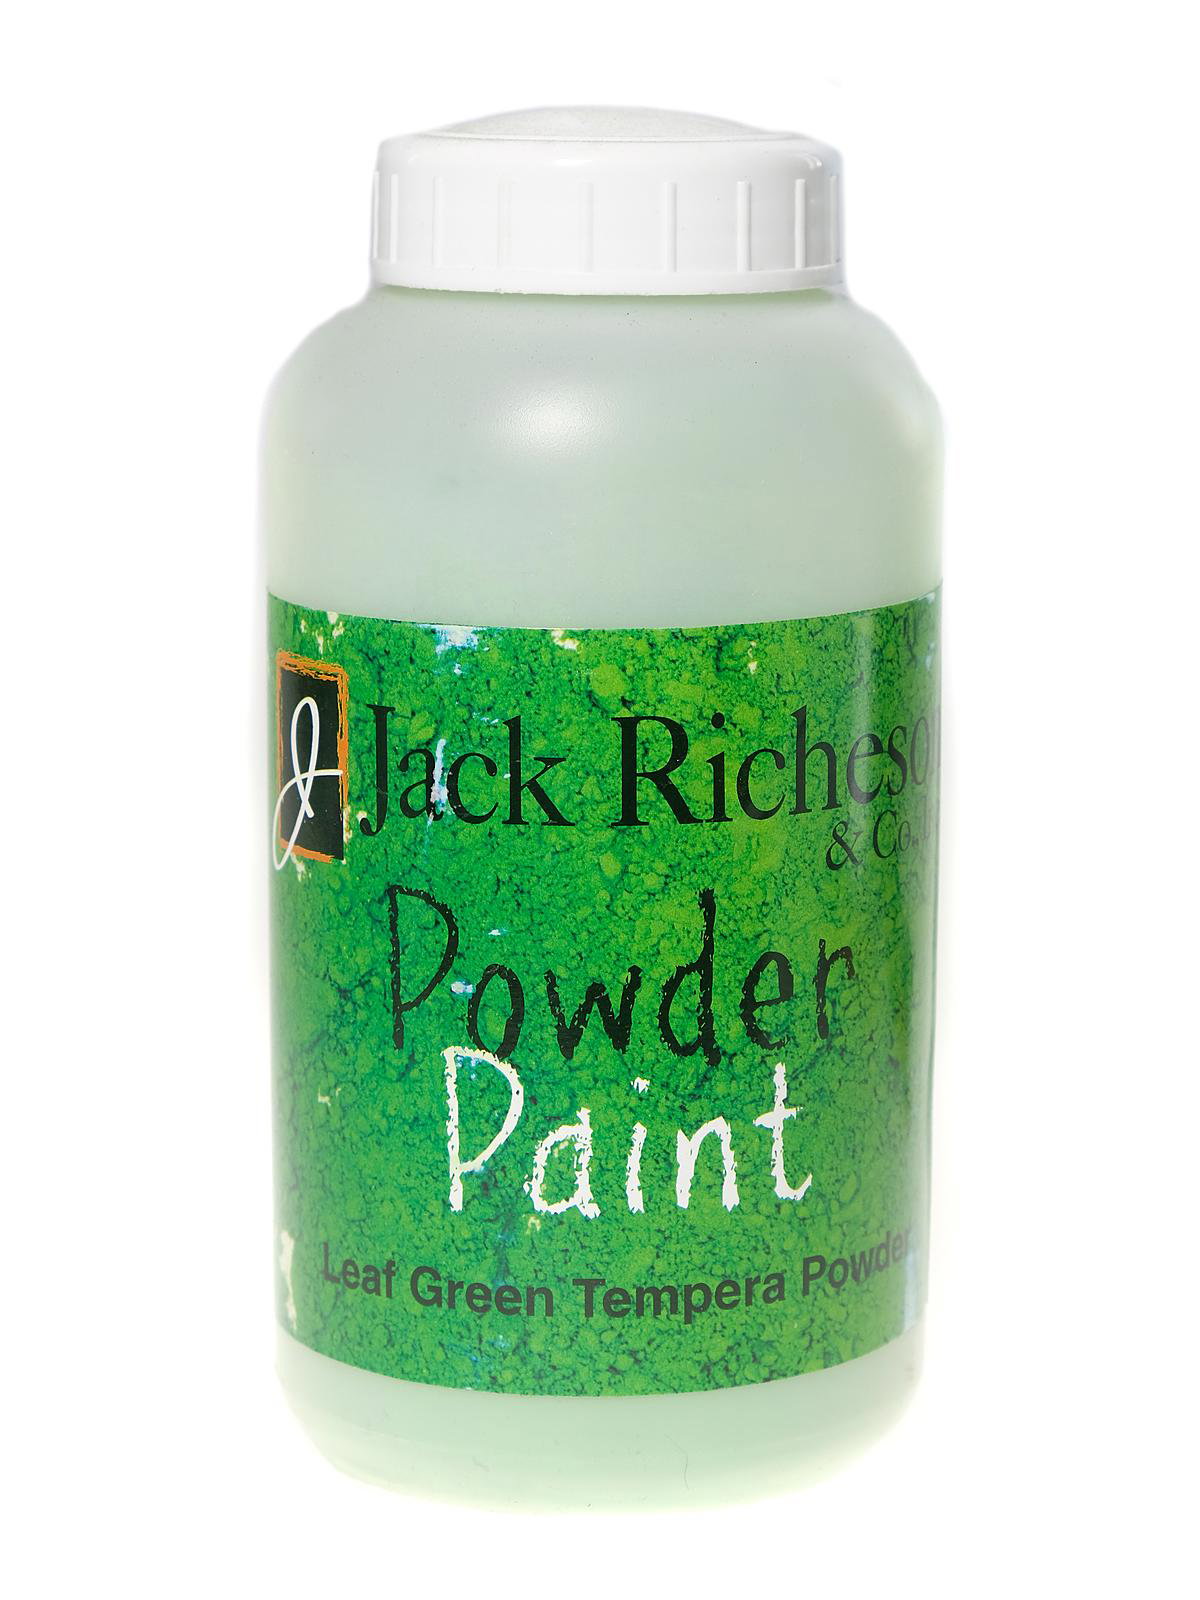 Jack Richeson Powder Paint, Assorted Colors, Set of 12